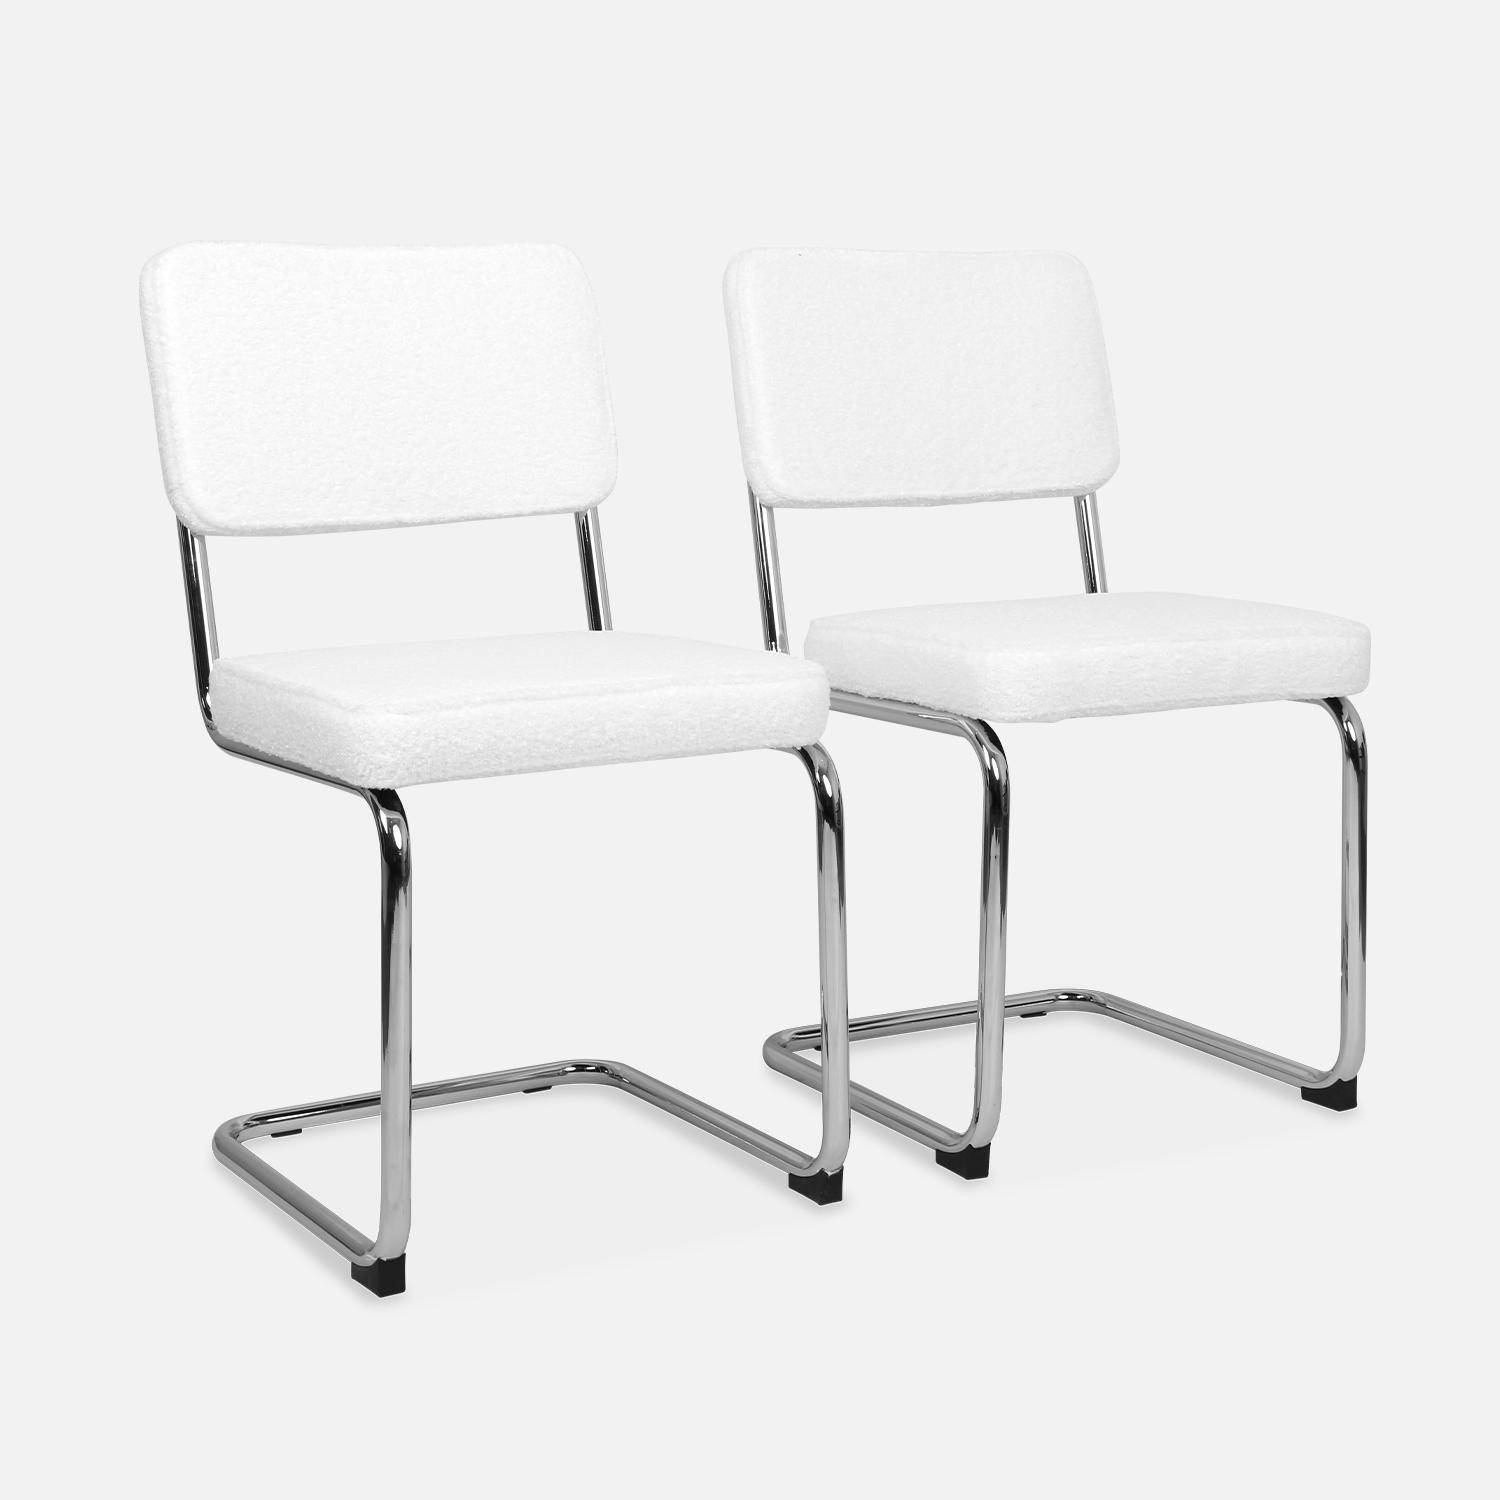 2 sillas voladizas - Maja - con rizos blancos, 46 x 54,5 x 84,5cm   Photo4